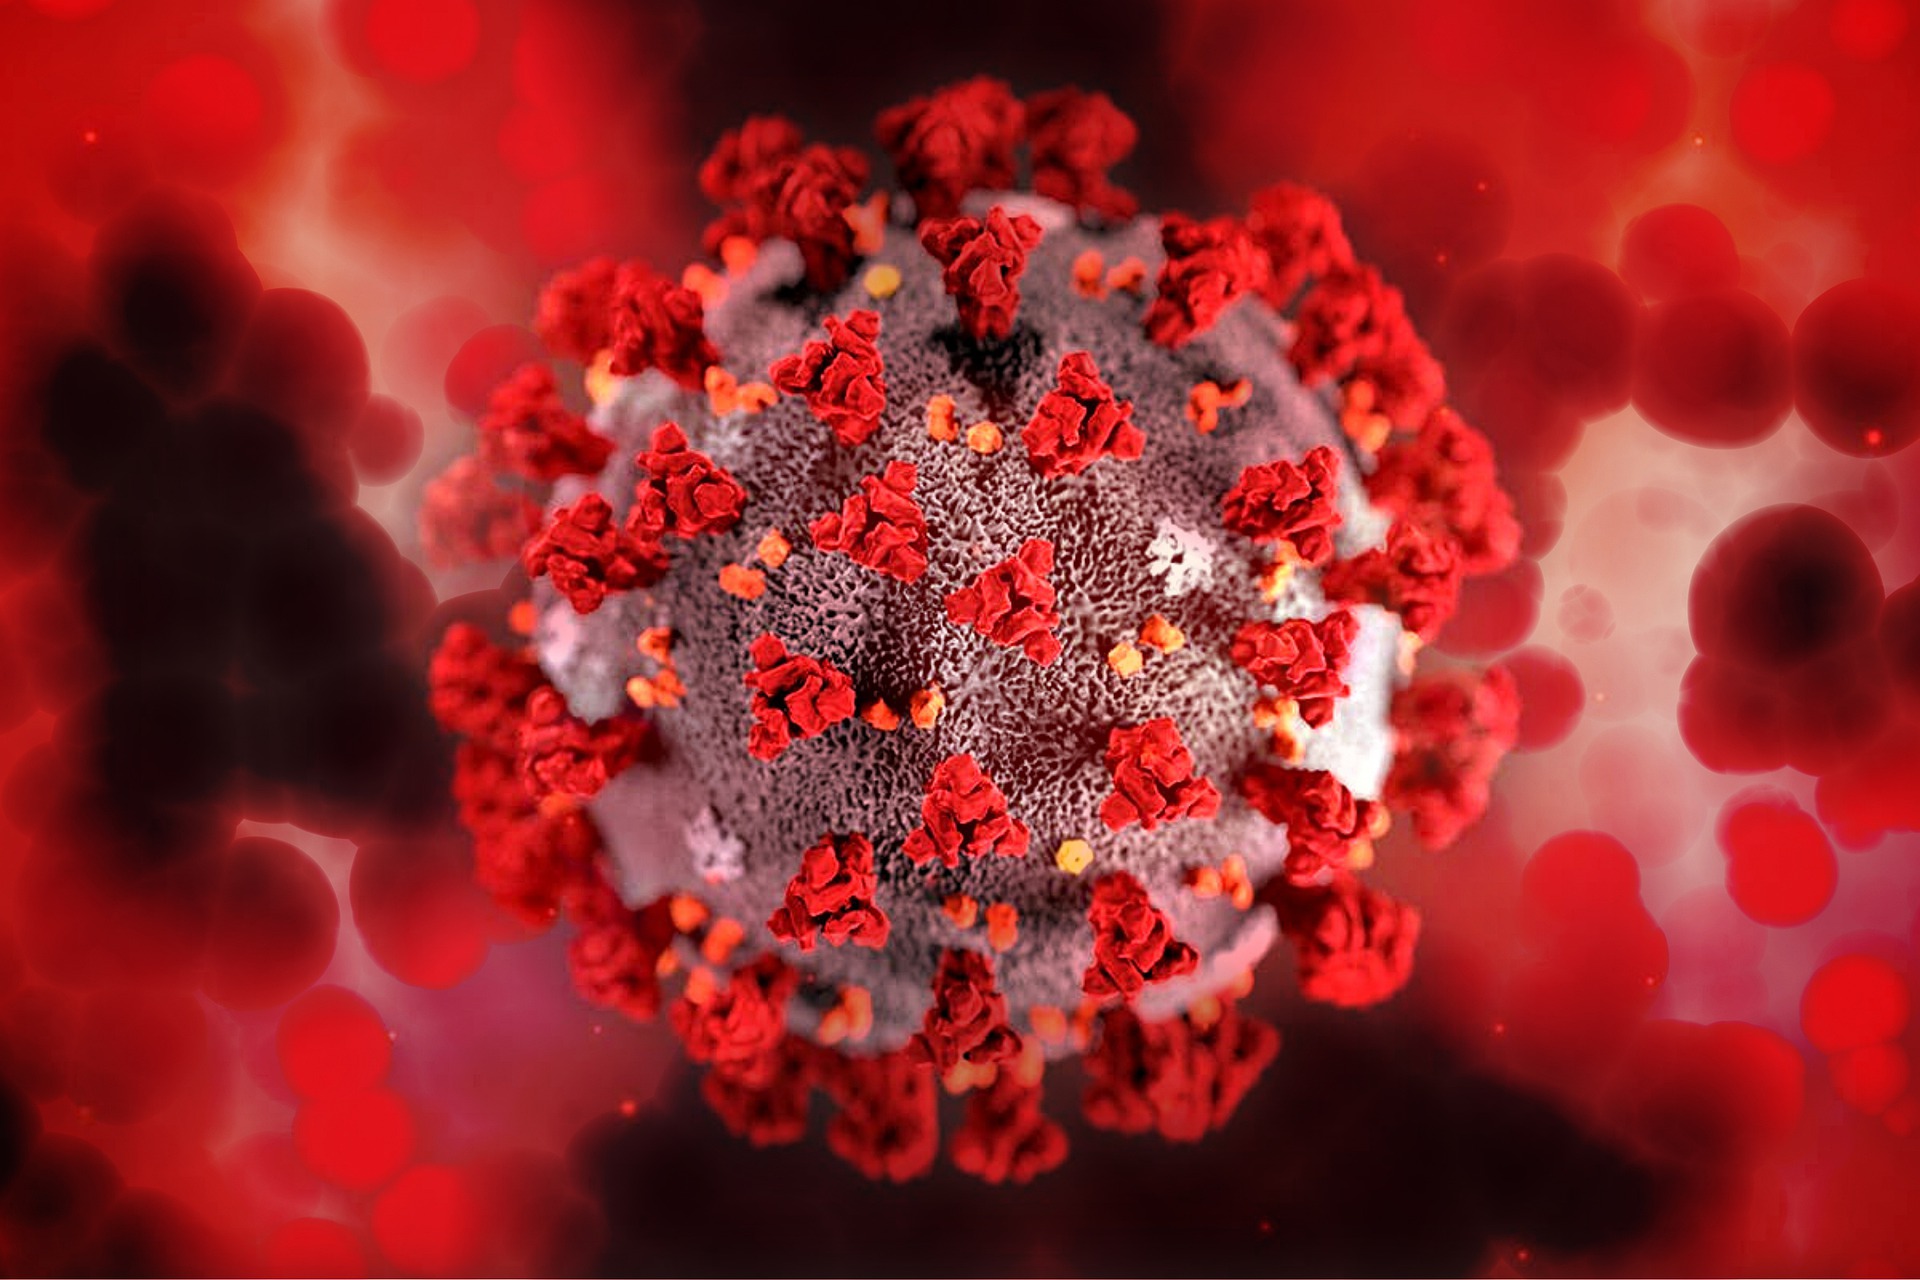 Россия обновила антирекорд по числу жертв коронавируса за сутки